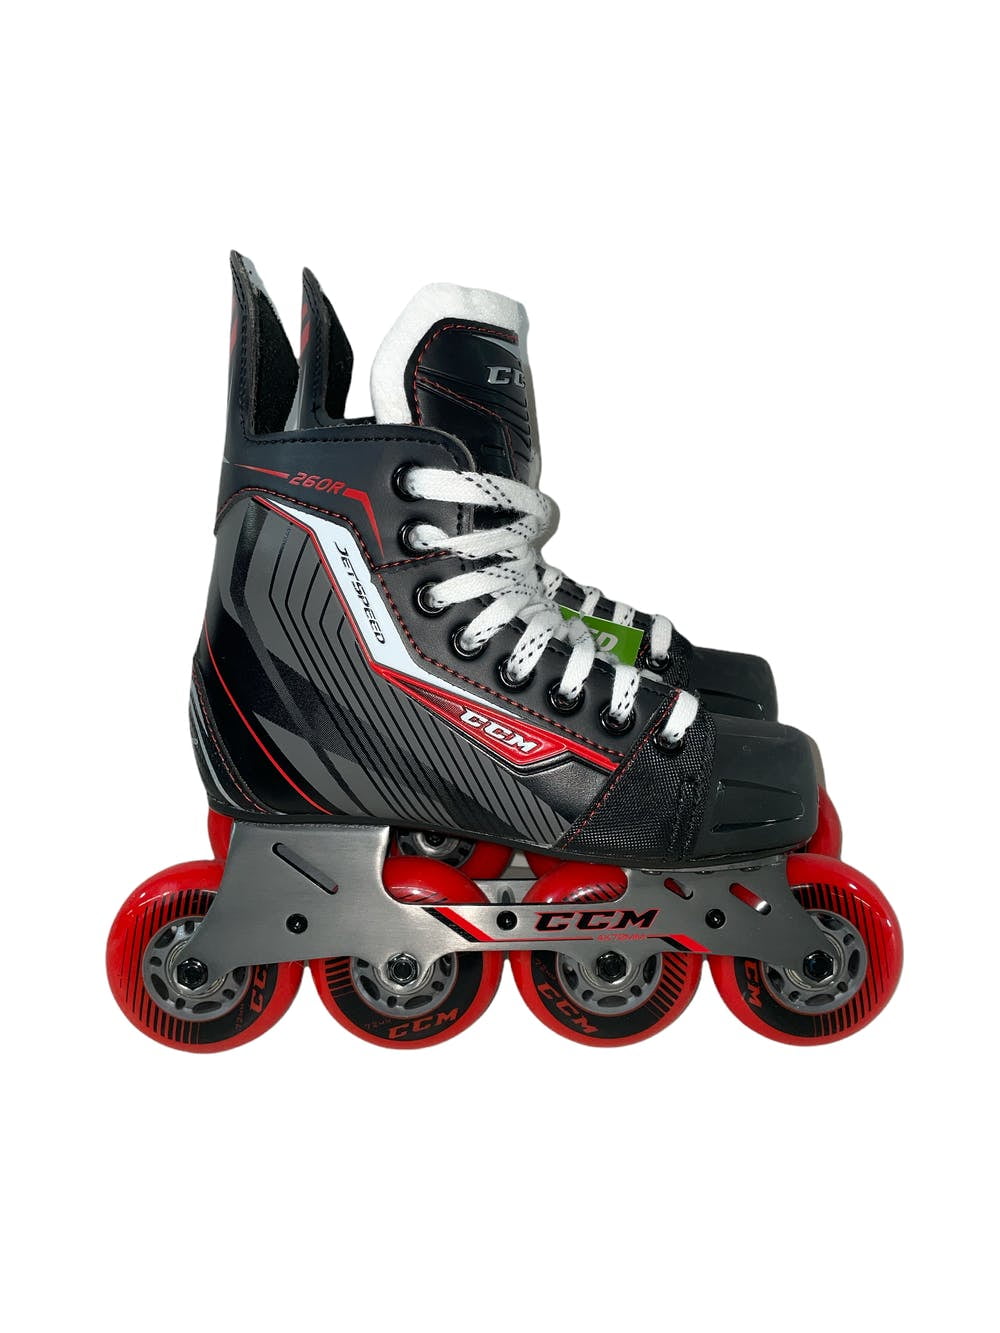 Used CCM Roller Hockey Skates Size 1